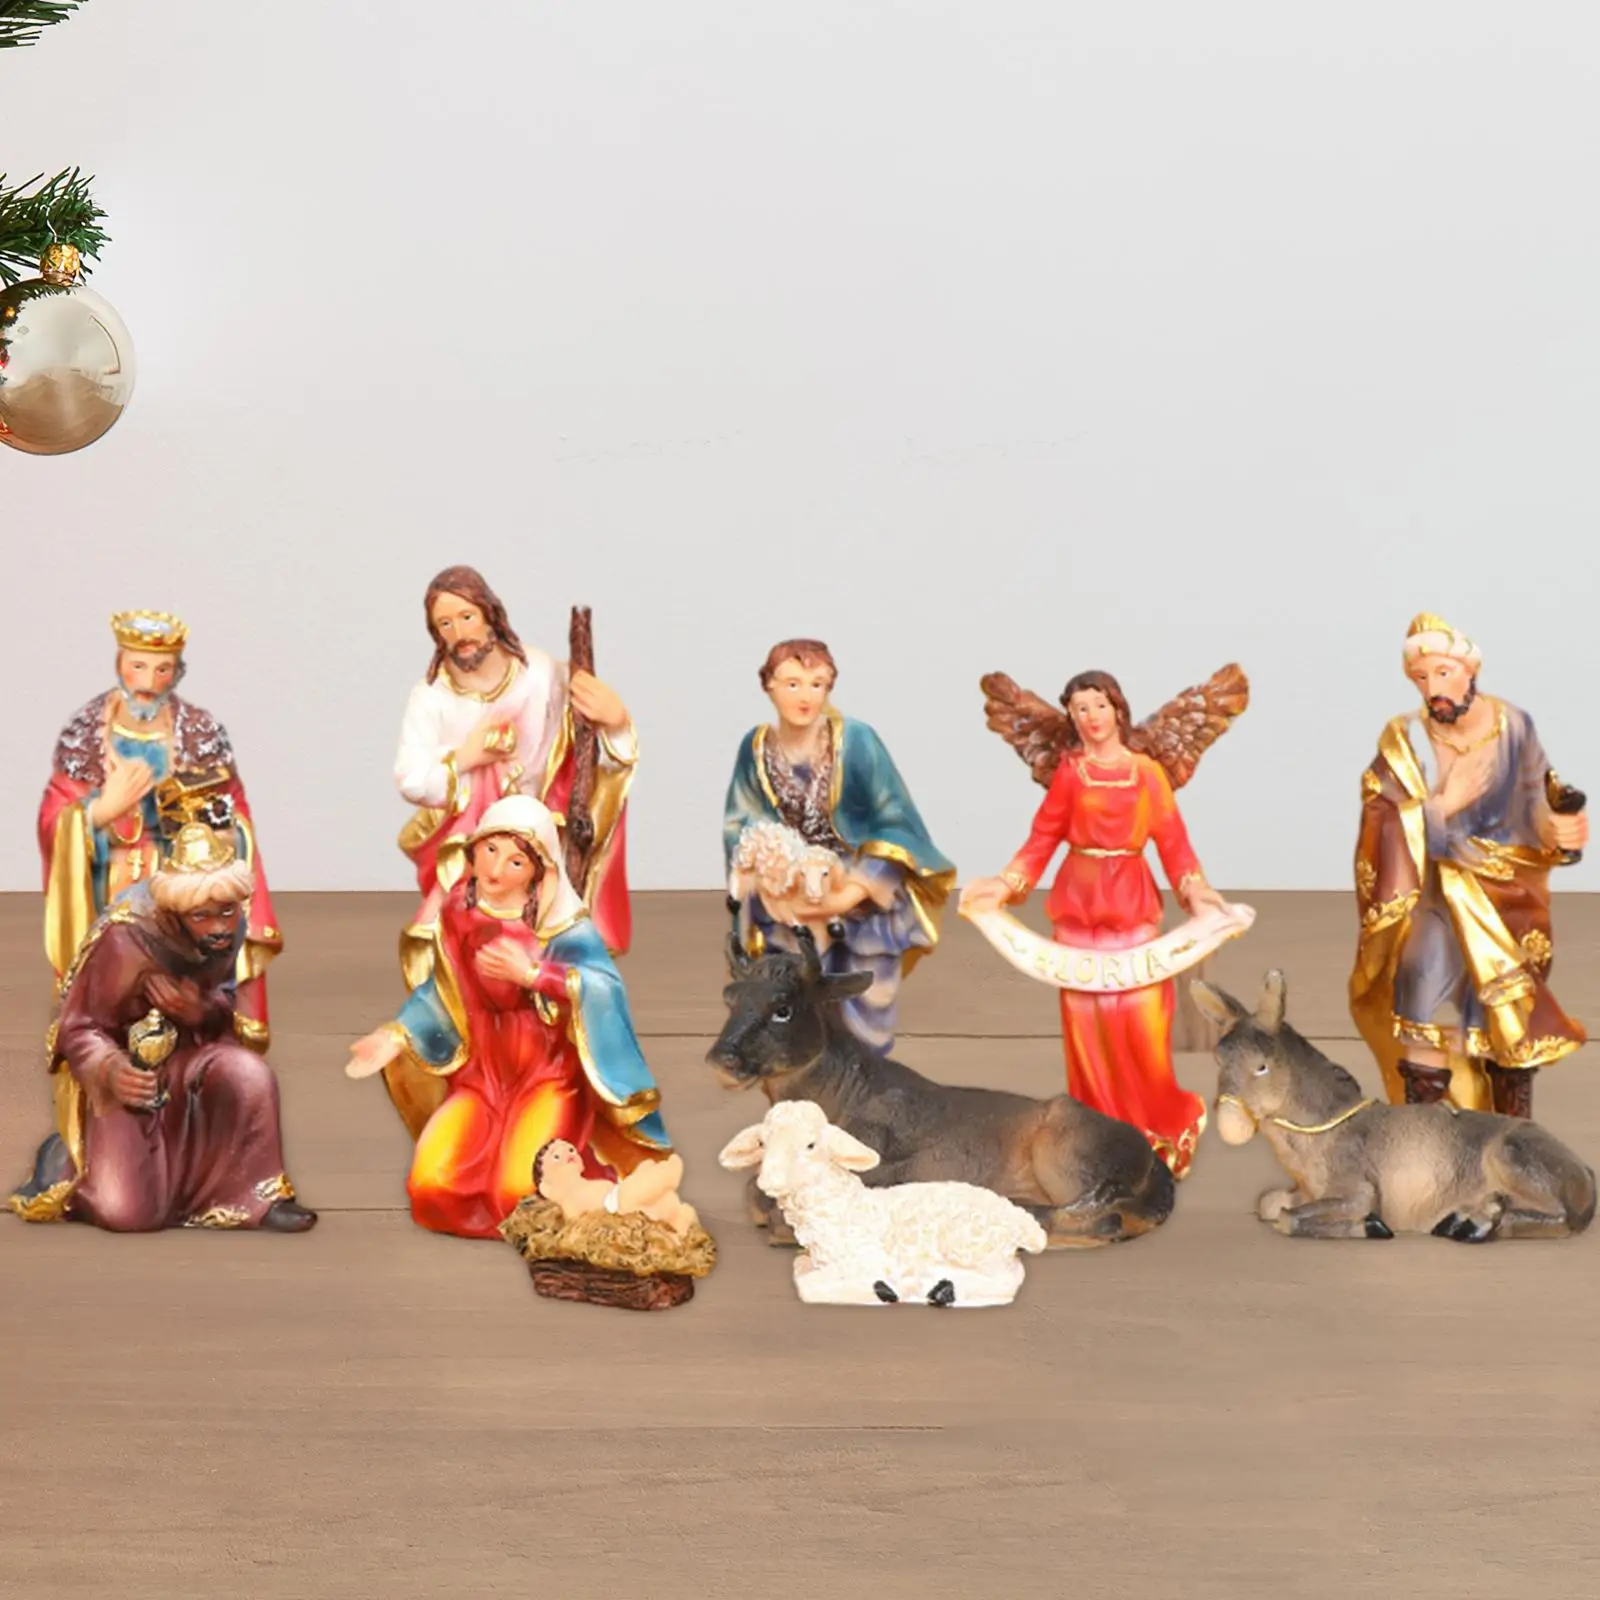 11 Pieces Nativity Scene Figurines Christmas Art for Table Centerpiece